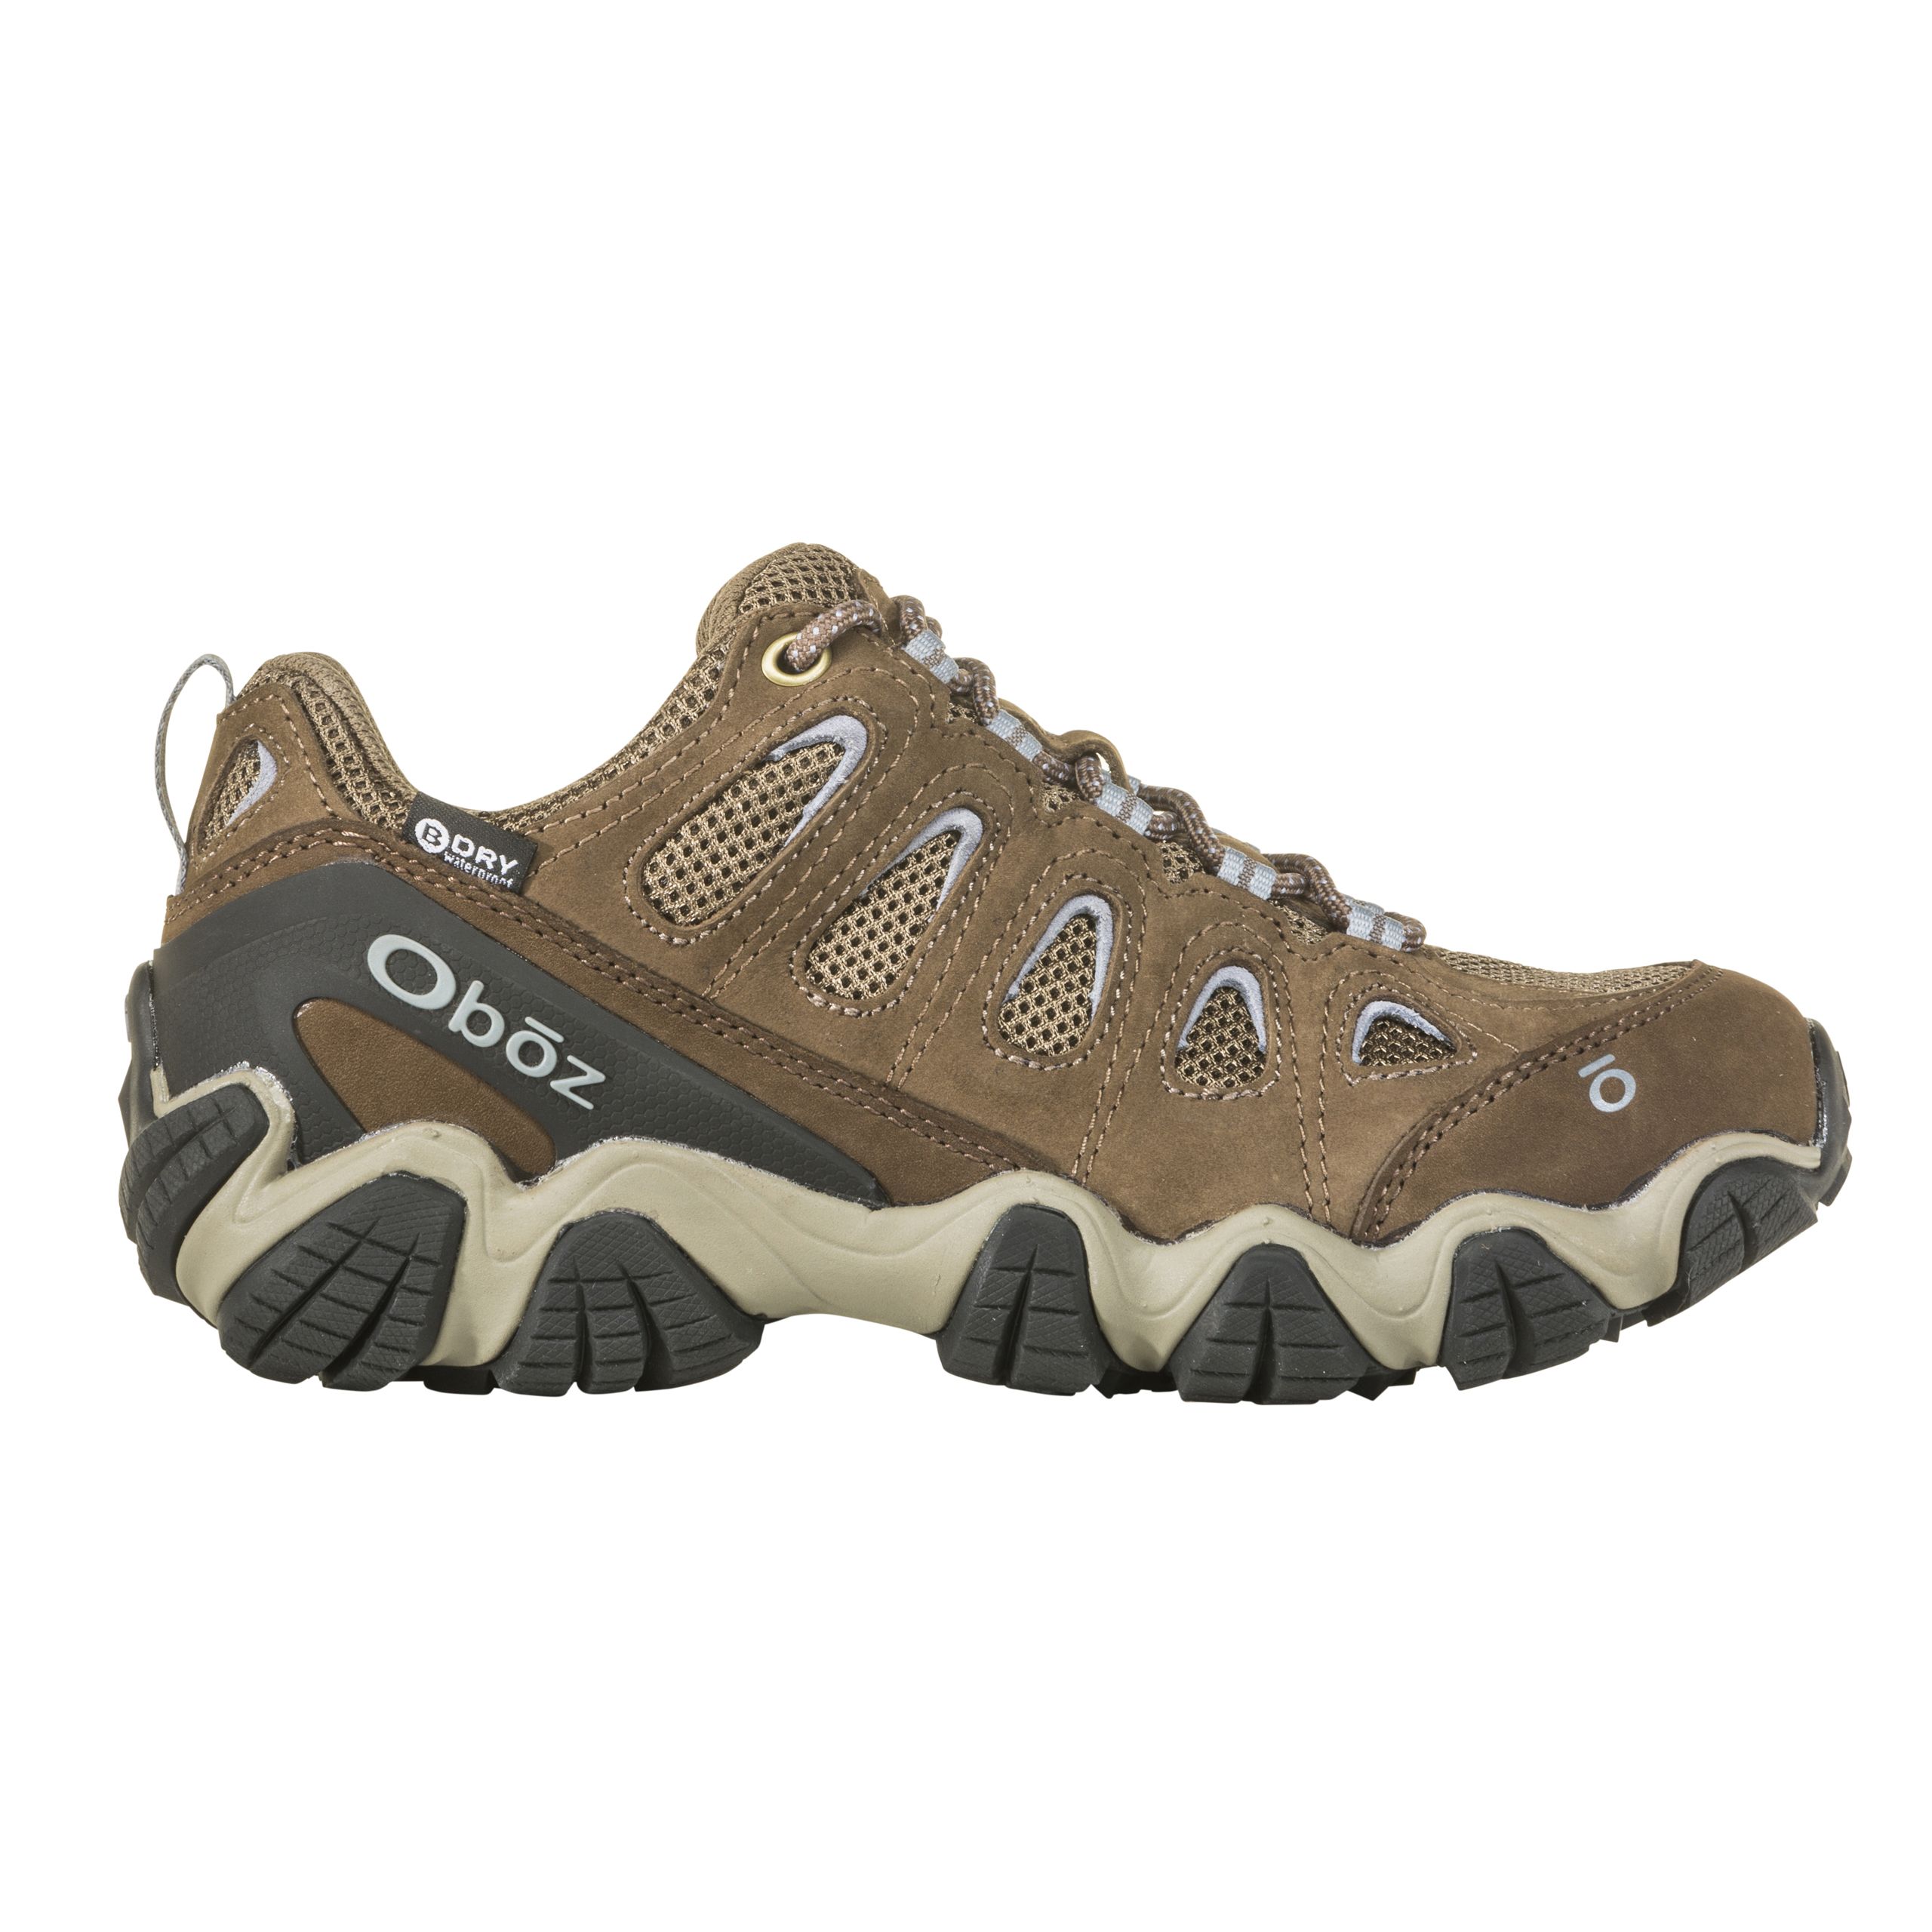 Oboz Womens Sawtooth Low Waterproof Walking Shoes